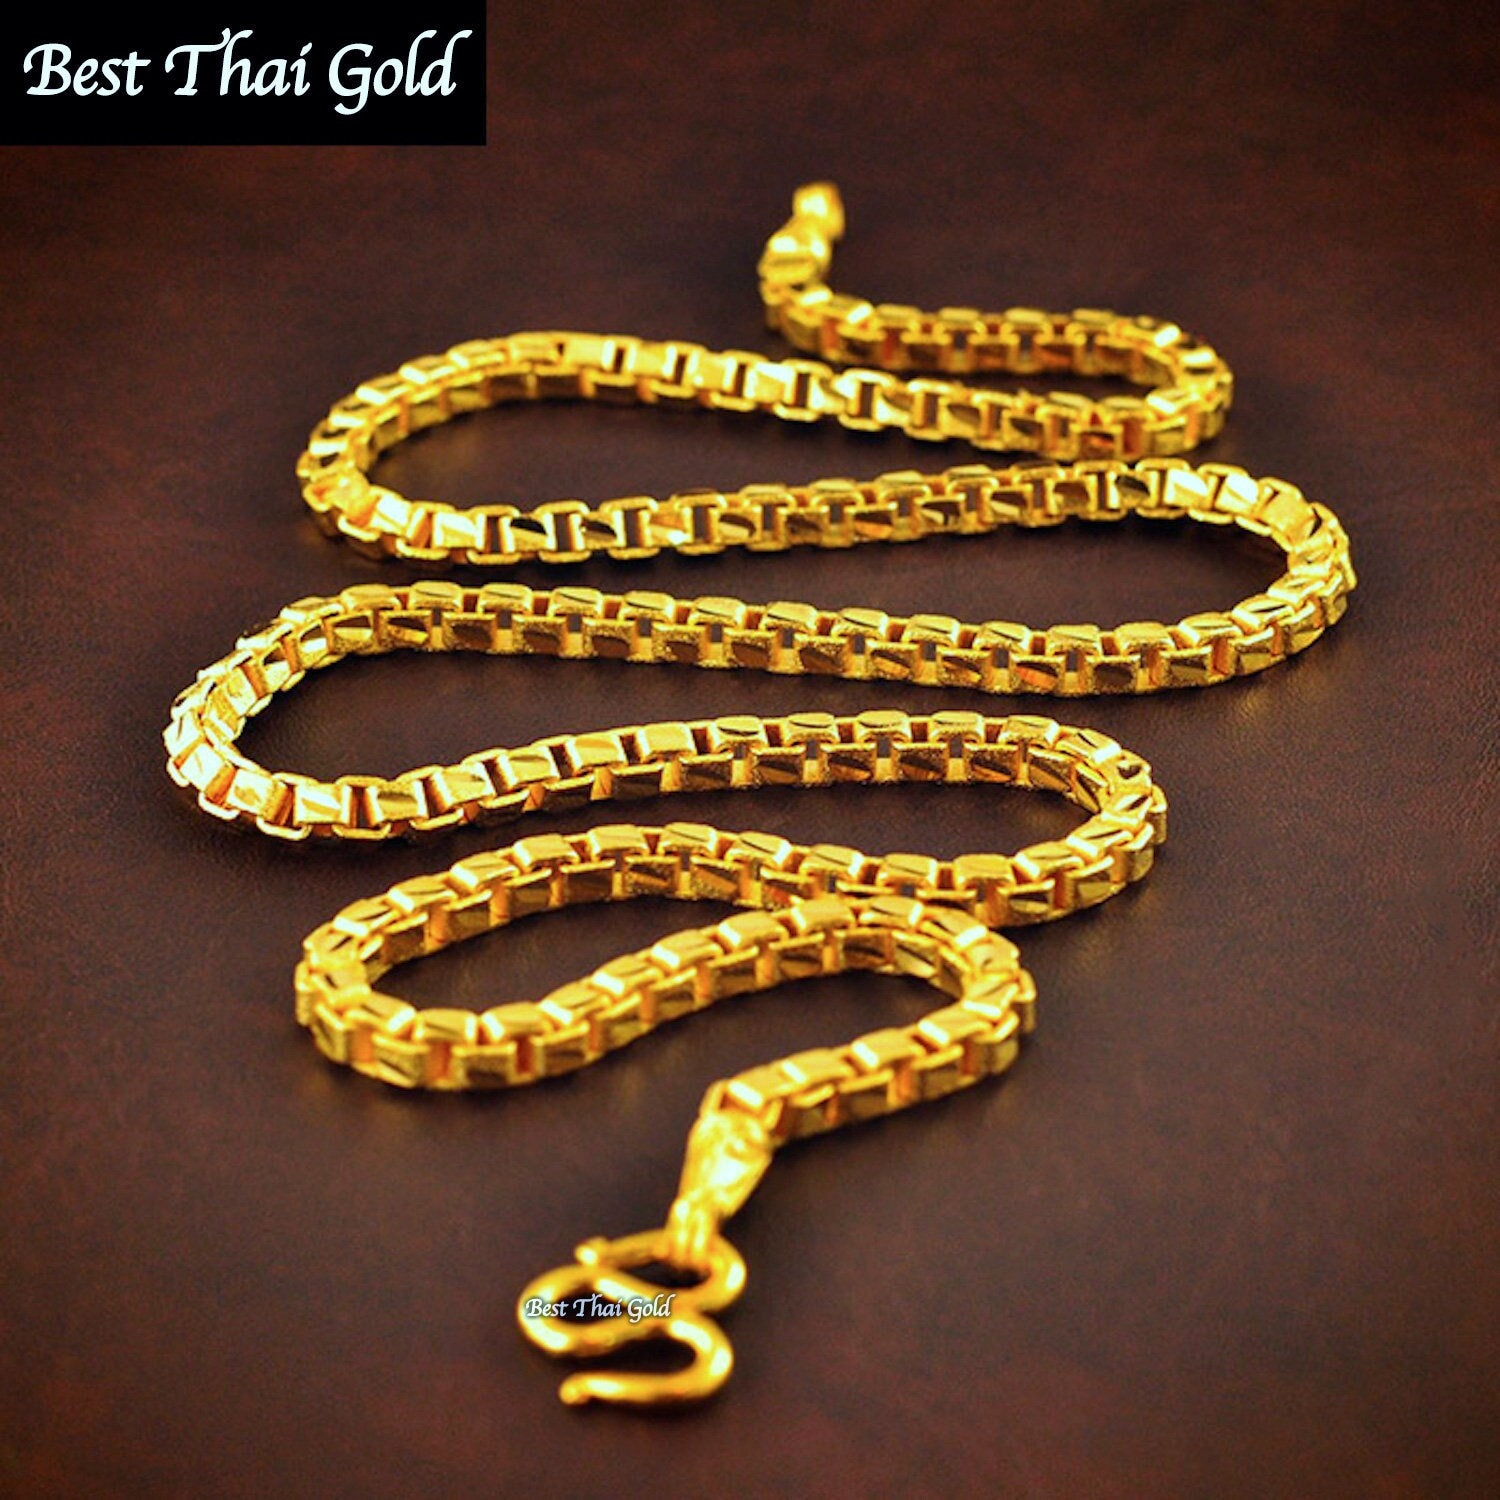 23K 24K THAI YELLOW GOLD DRAGON SET NECKLACE BRACELET Premium Jewelry #SK96  | eBay